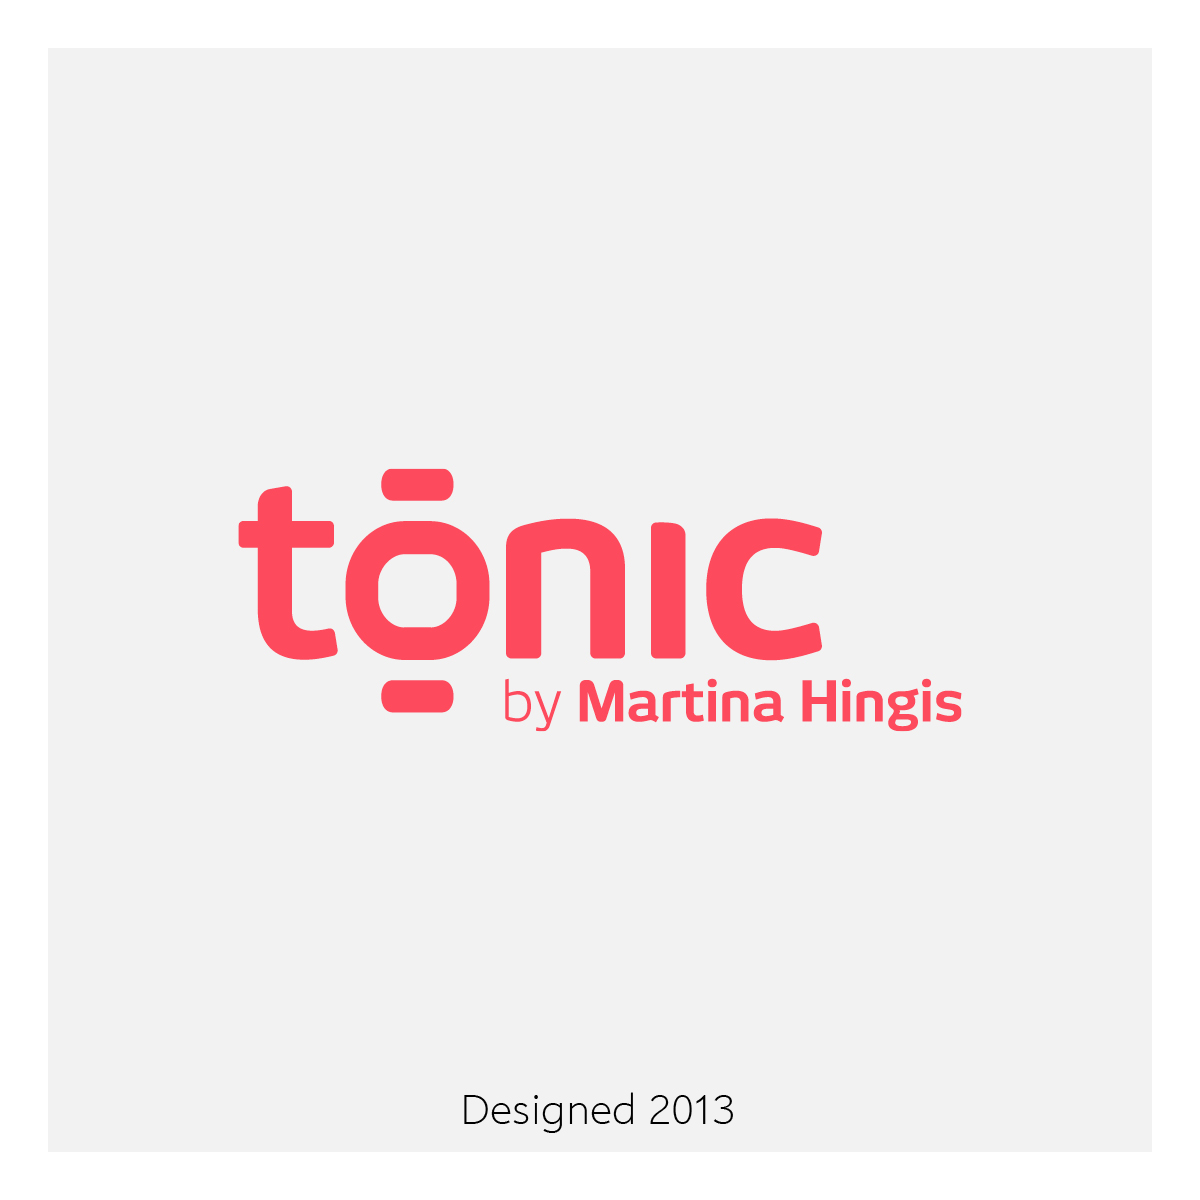 Tonic by Martina Hingis Logo Design | Etude Digital